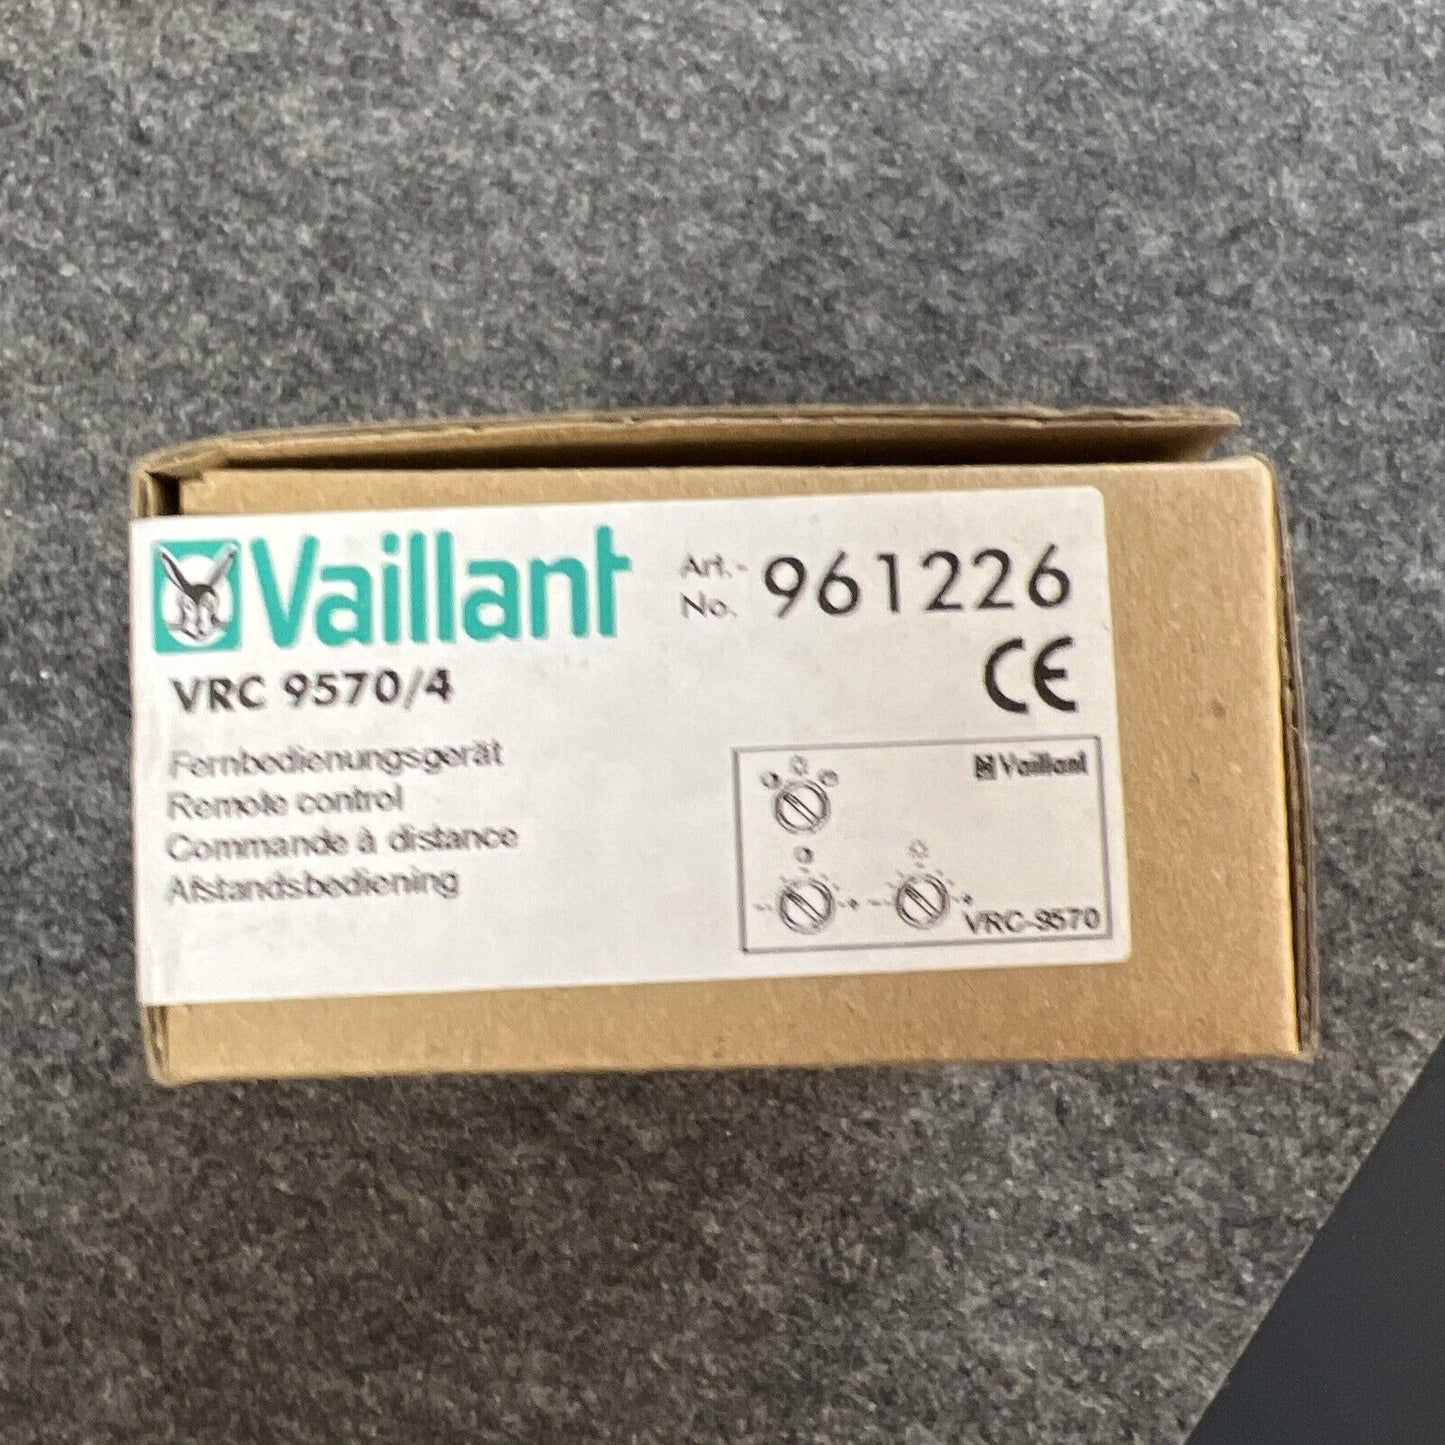 Vaillant VRC 9570/4 961226